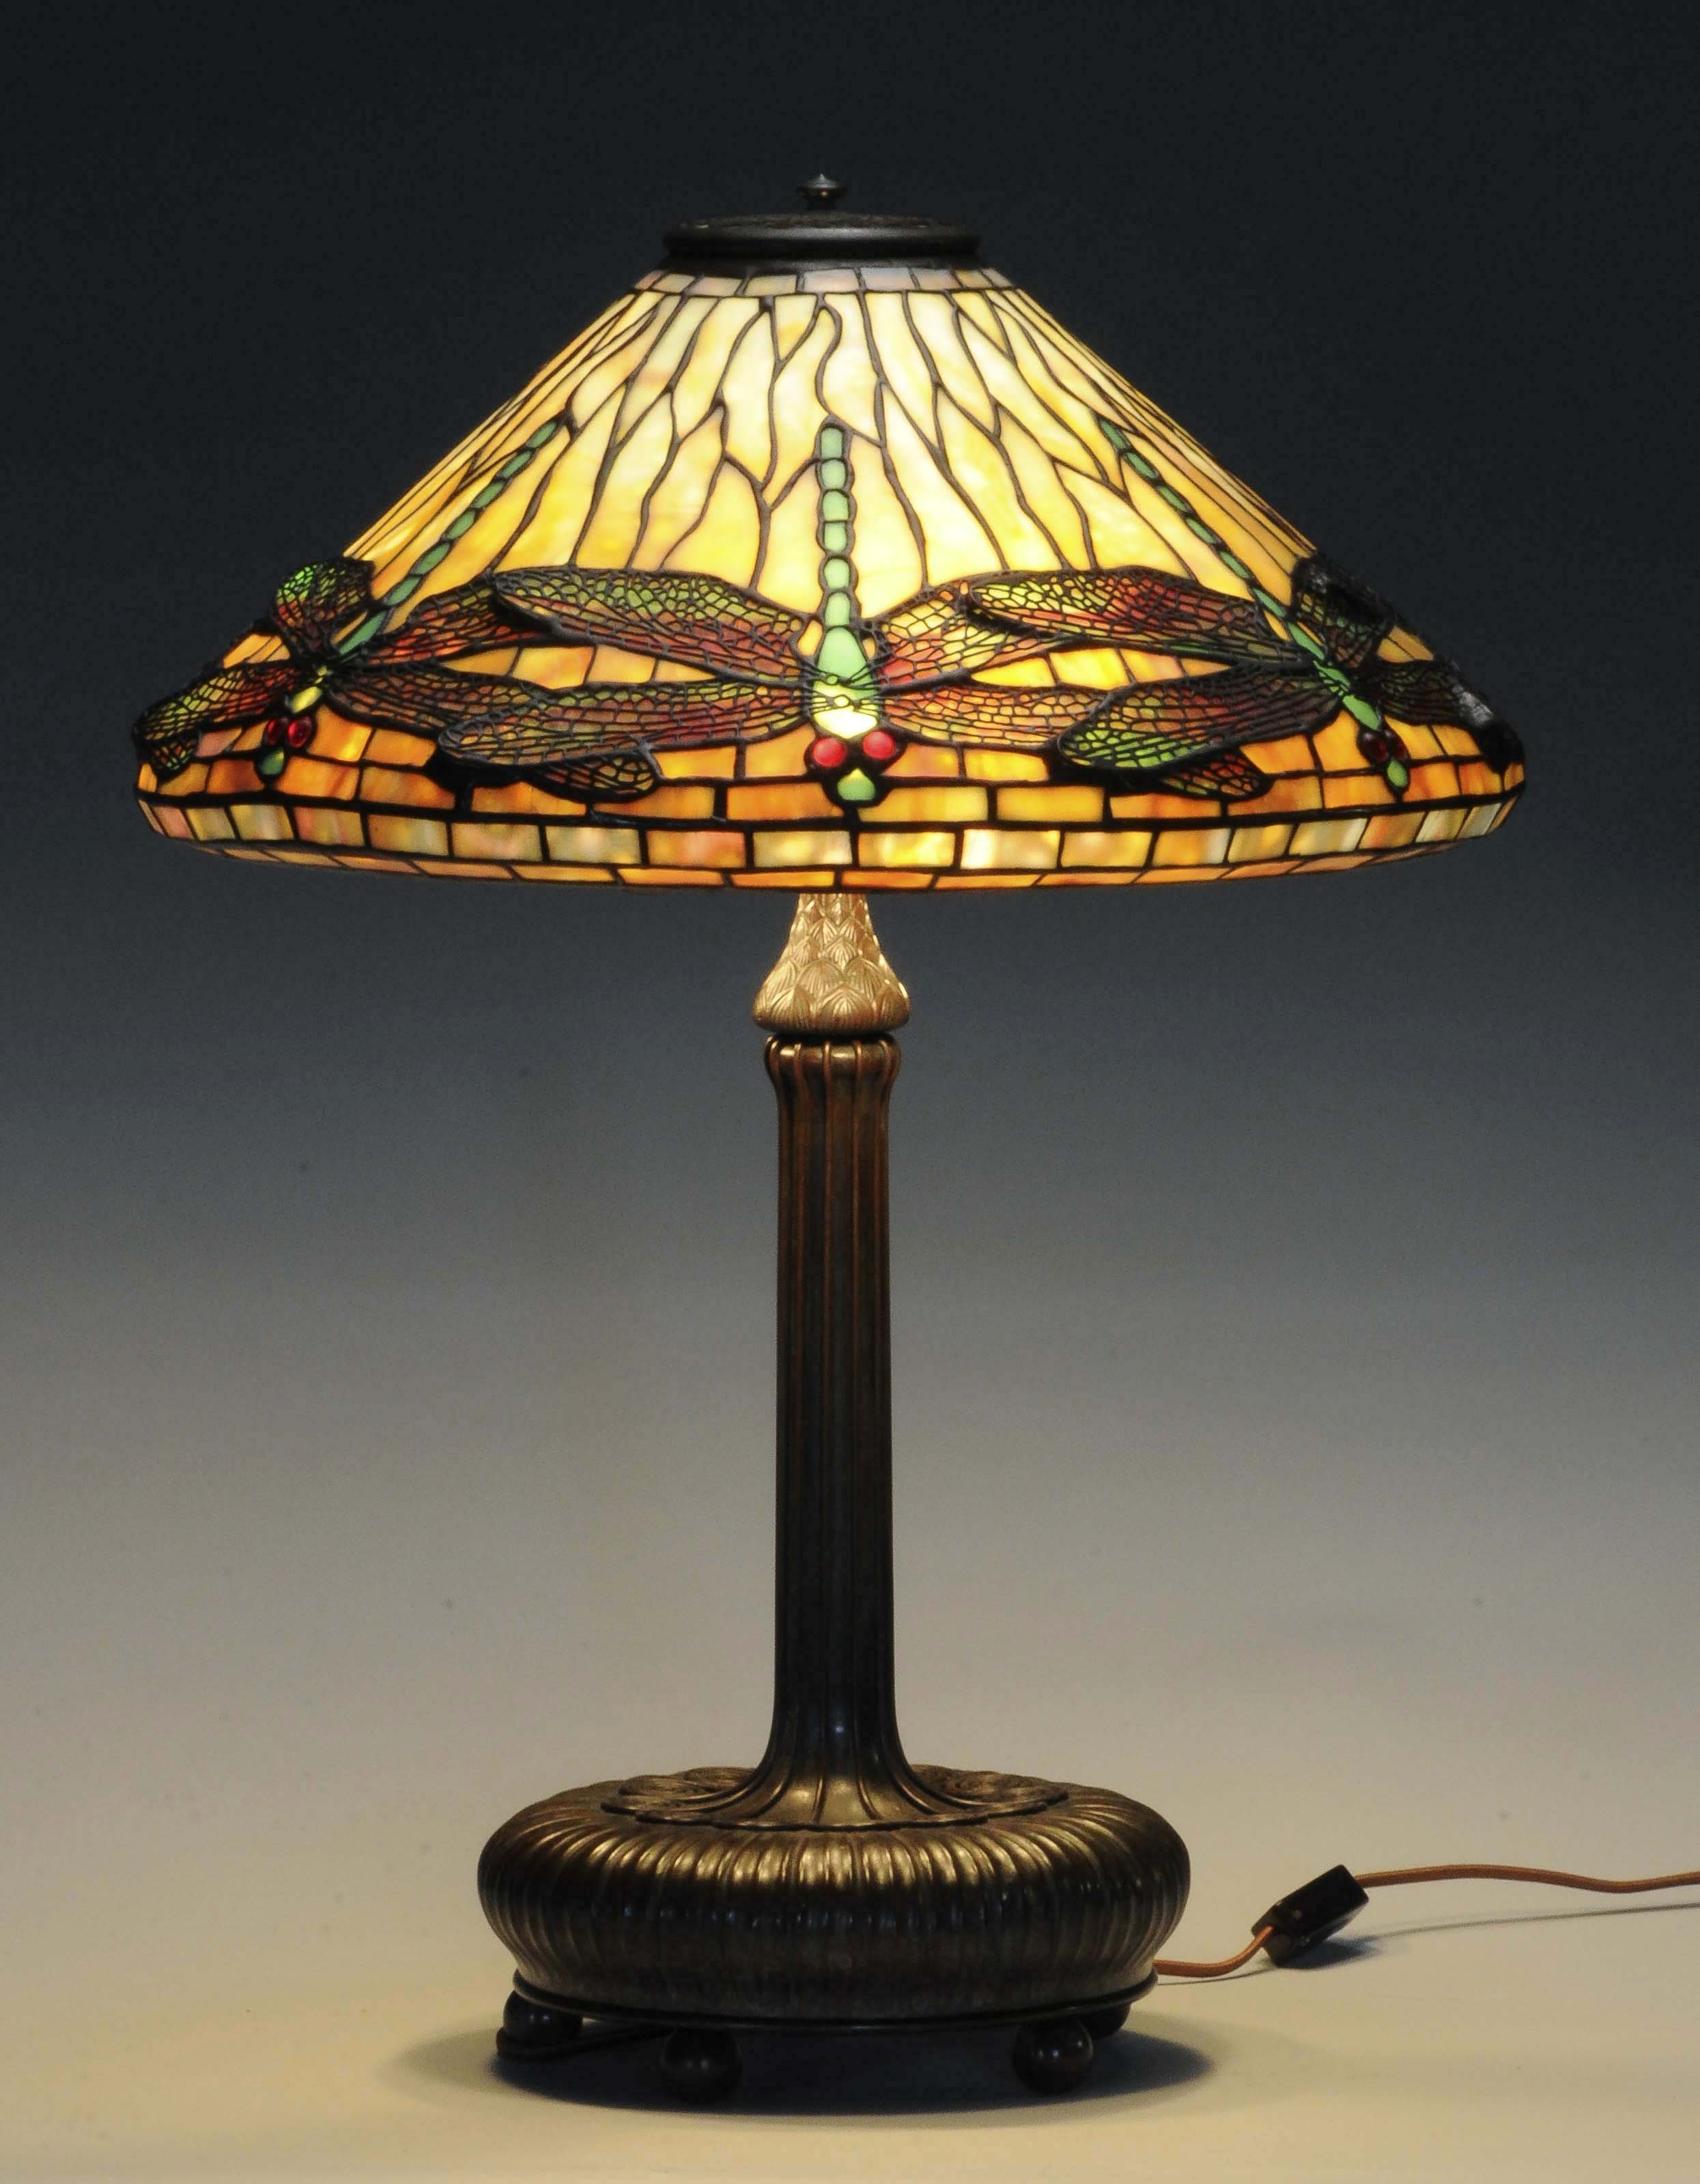 Tiffany Studios 17" Dragonfly Lamp, estimated at $30,000-45,000.